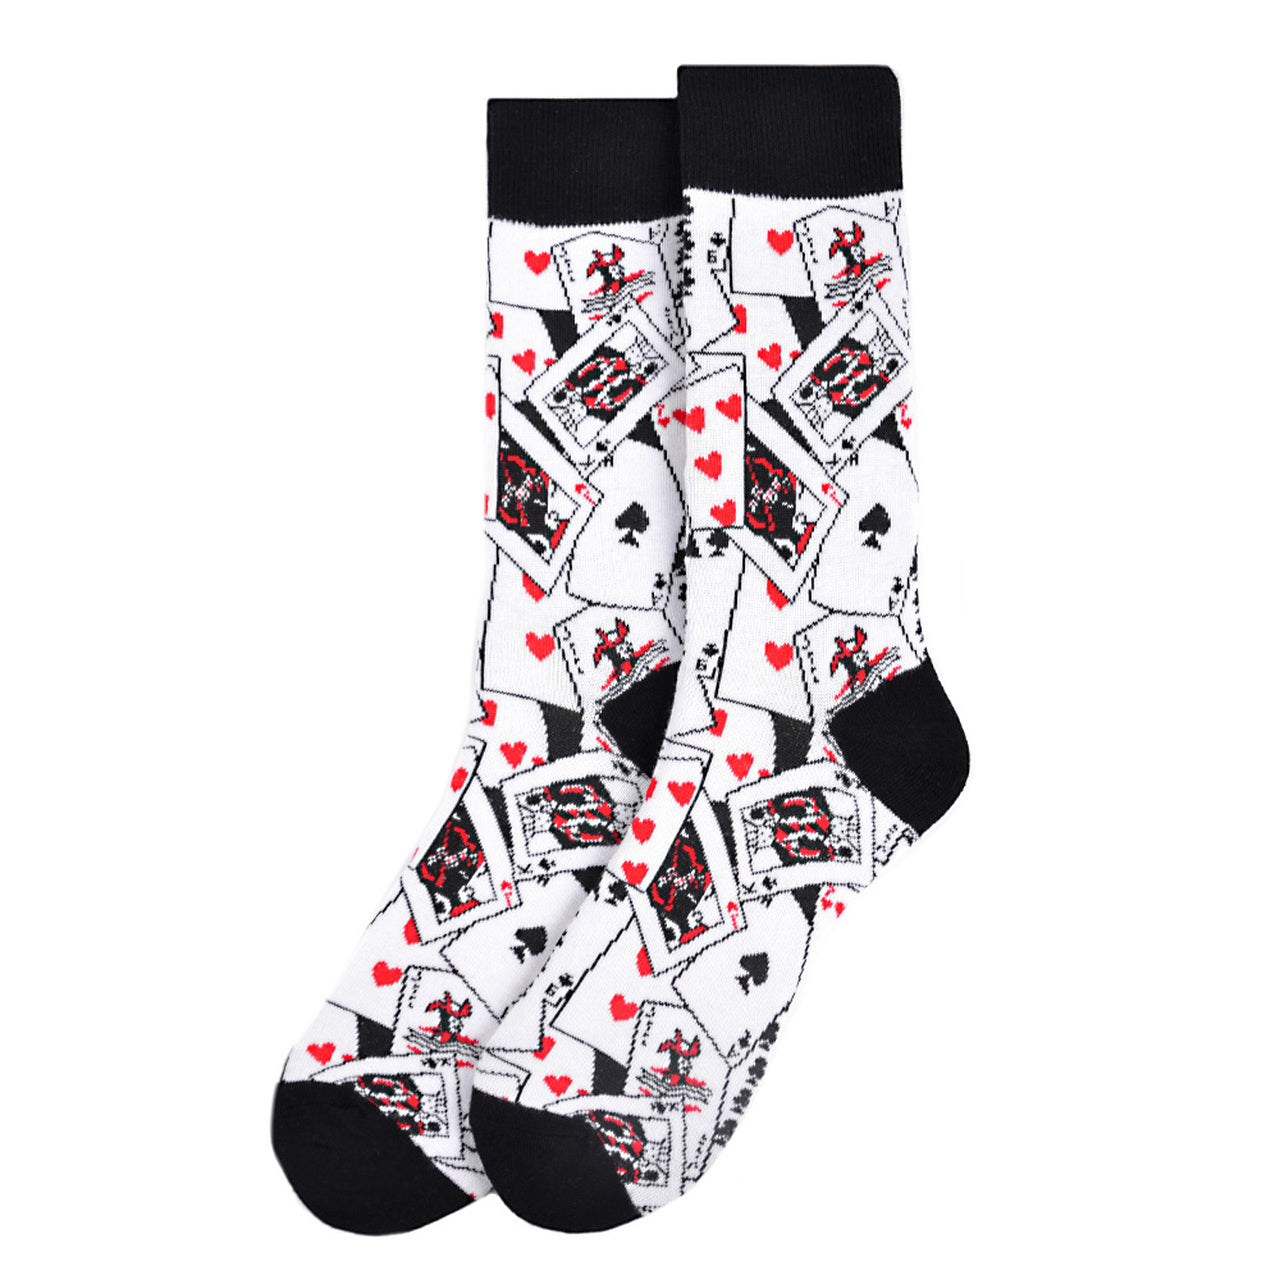 Socktastic Tuesday Sock Bundle - Men's Game Night Sock Collection (3 pairs of socks)